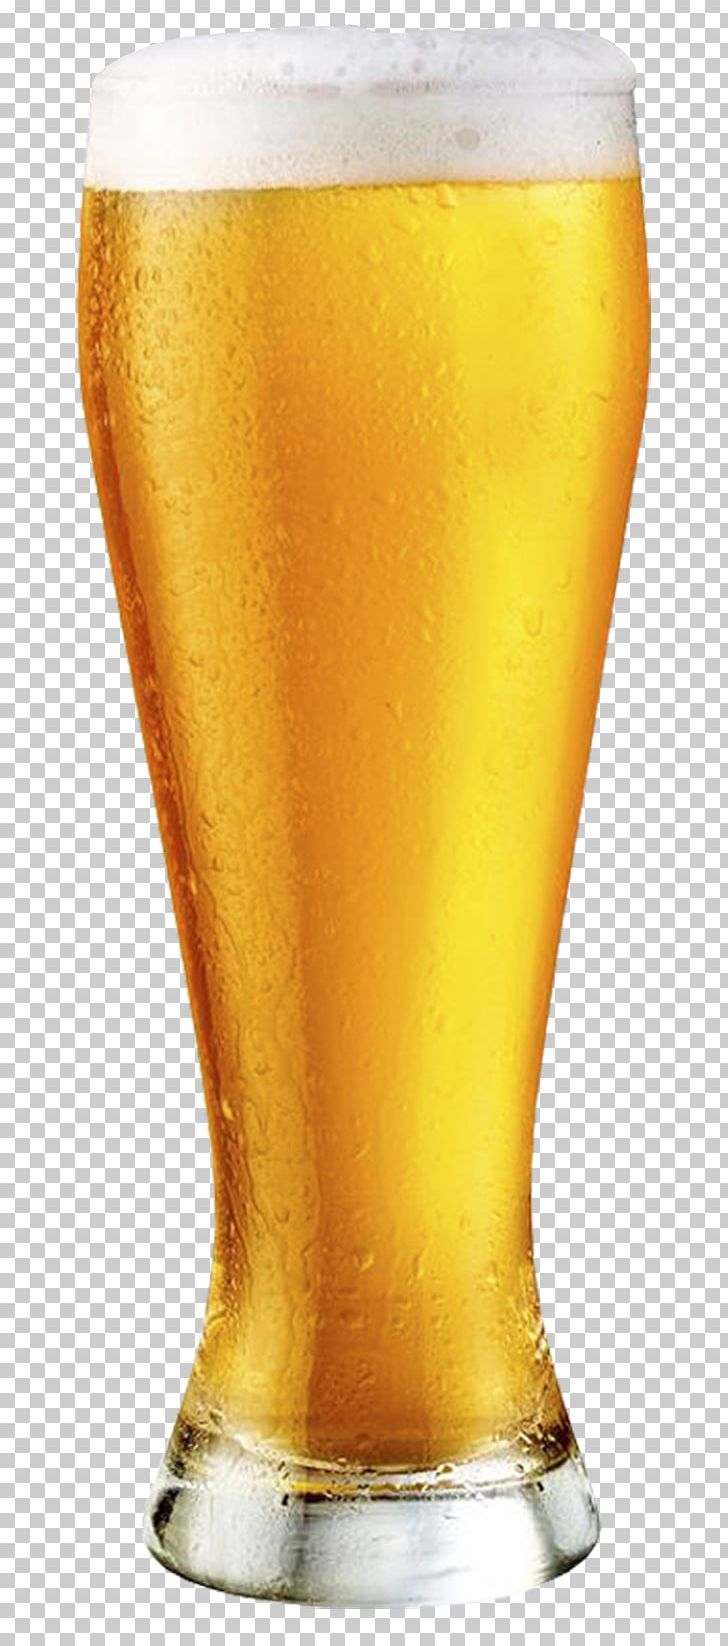 Wheat Beer Pilsner Distilled Beverage Beer Glasses PNG, Clipart, Alcoholic Drink, Beer, Beer Brewing Grains Malts, Beer Cocktail, Beer Glass Free PNG Download